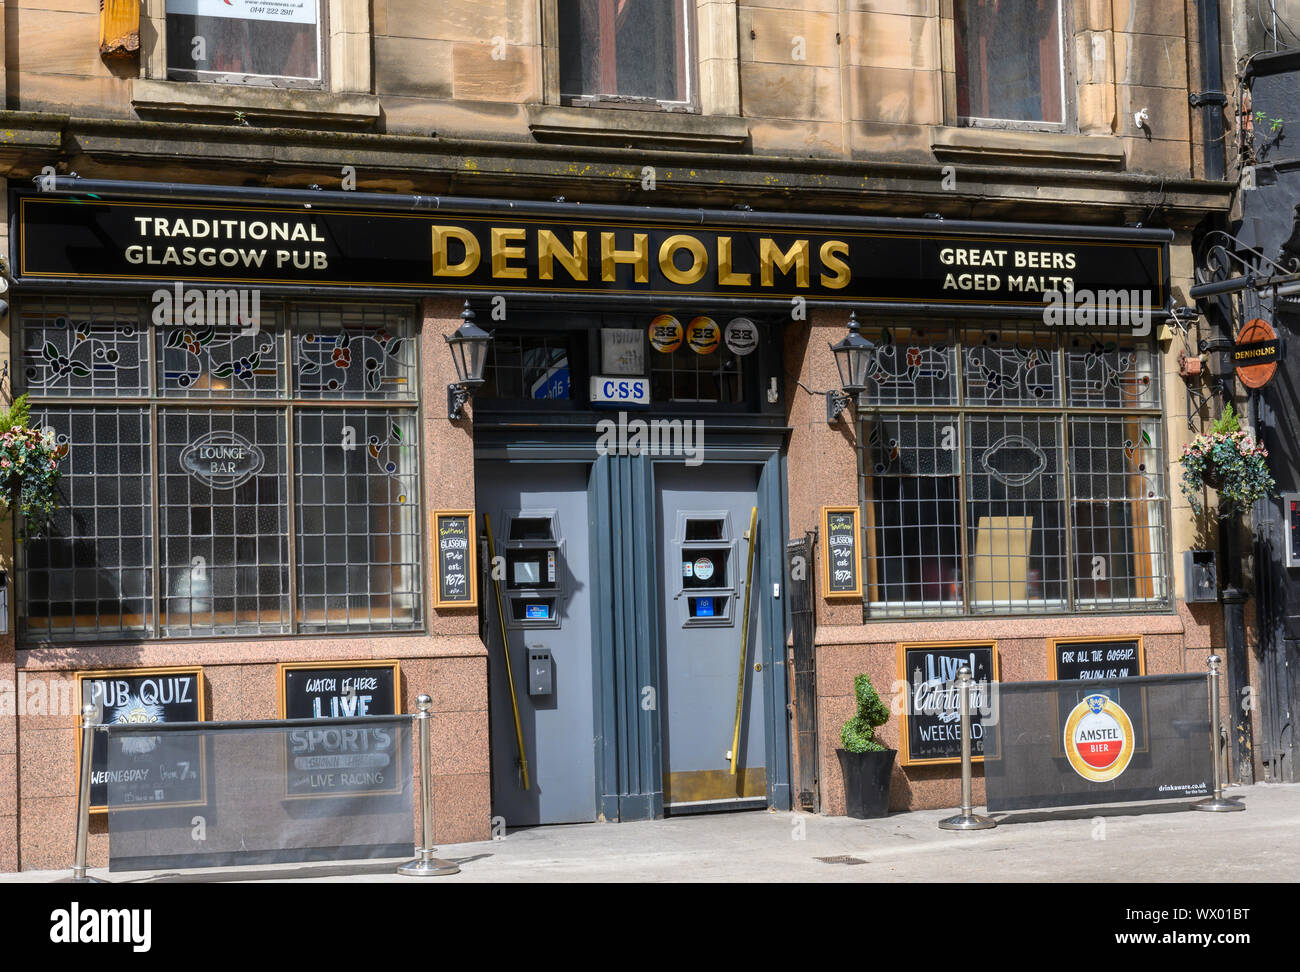 Denholms Traditional Glasgow Pub, Hope Street, Glasgow, Scotland, UK Stock Photo